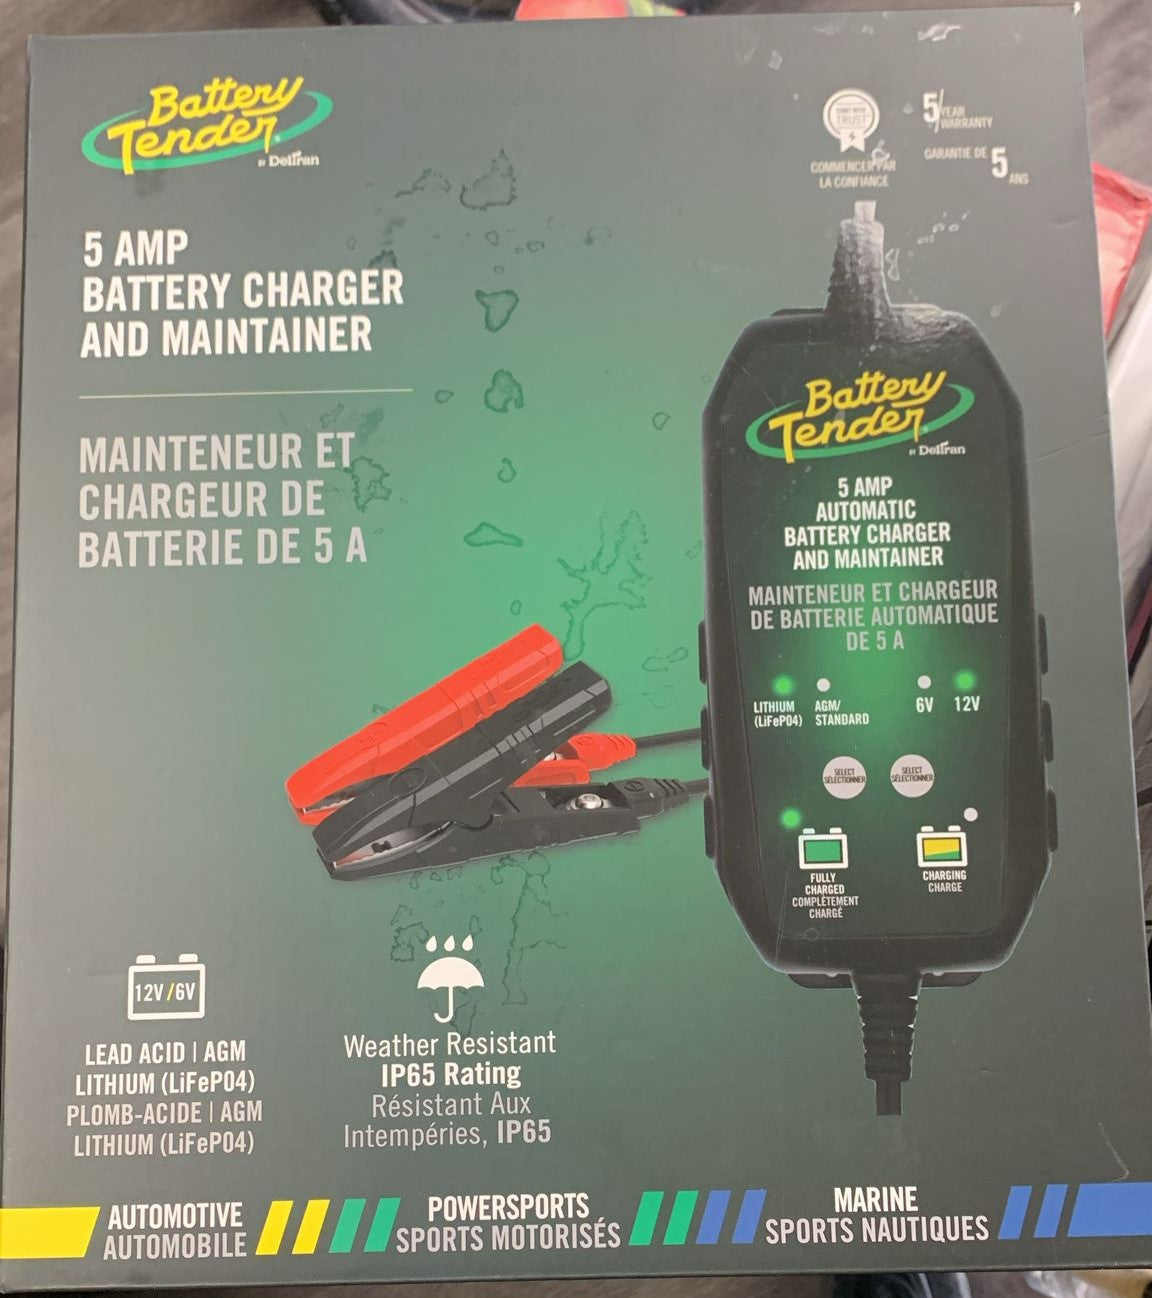 Battery Tender 6V/12V, 5 Amp Selectable Lead Acid & Lithium Battery Charger